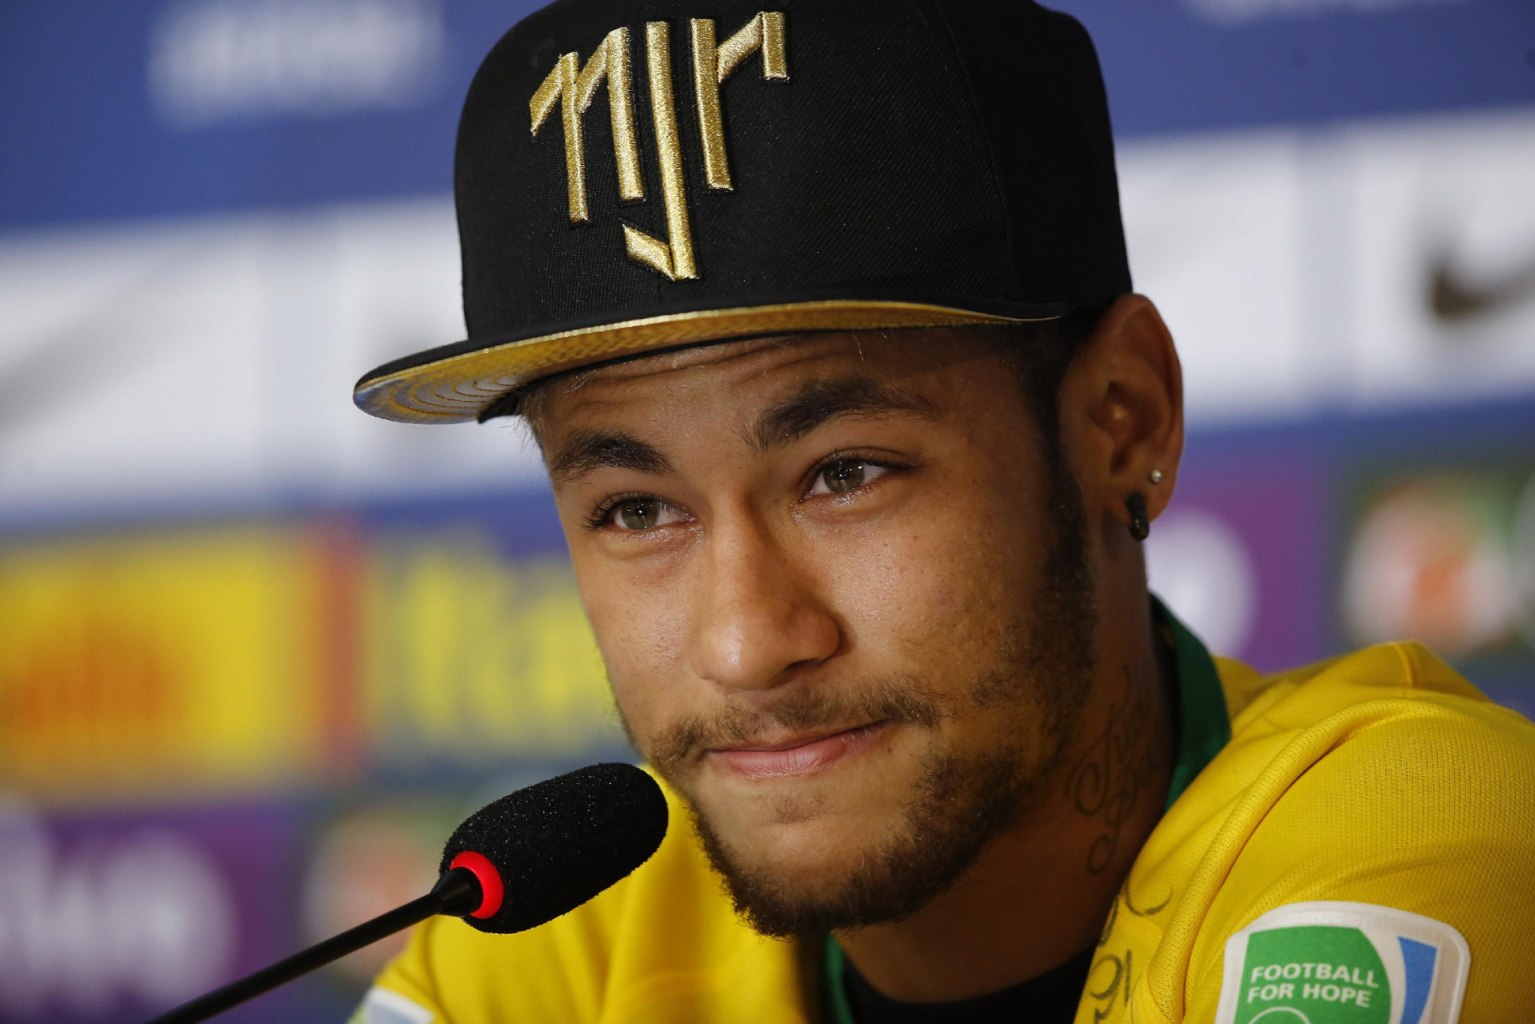 Neymar wearing a NJR hat and cap